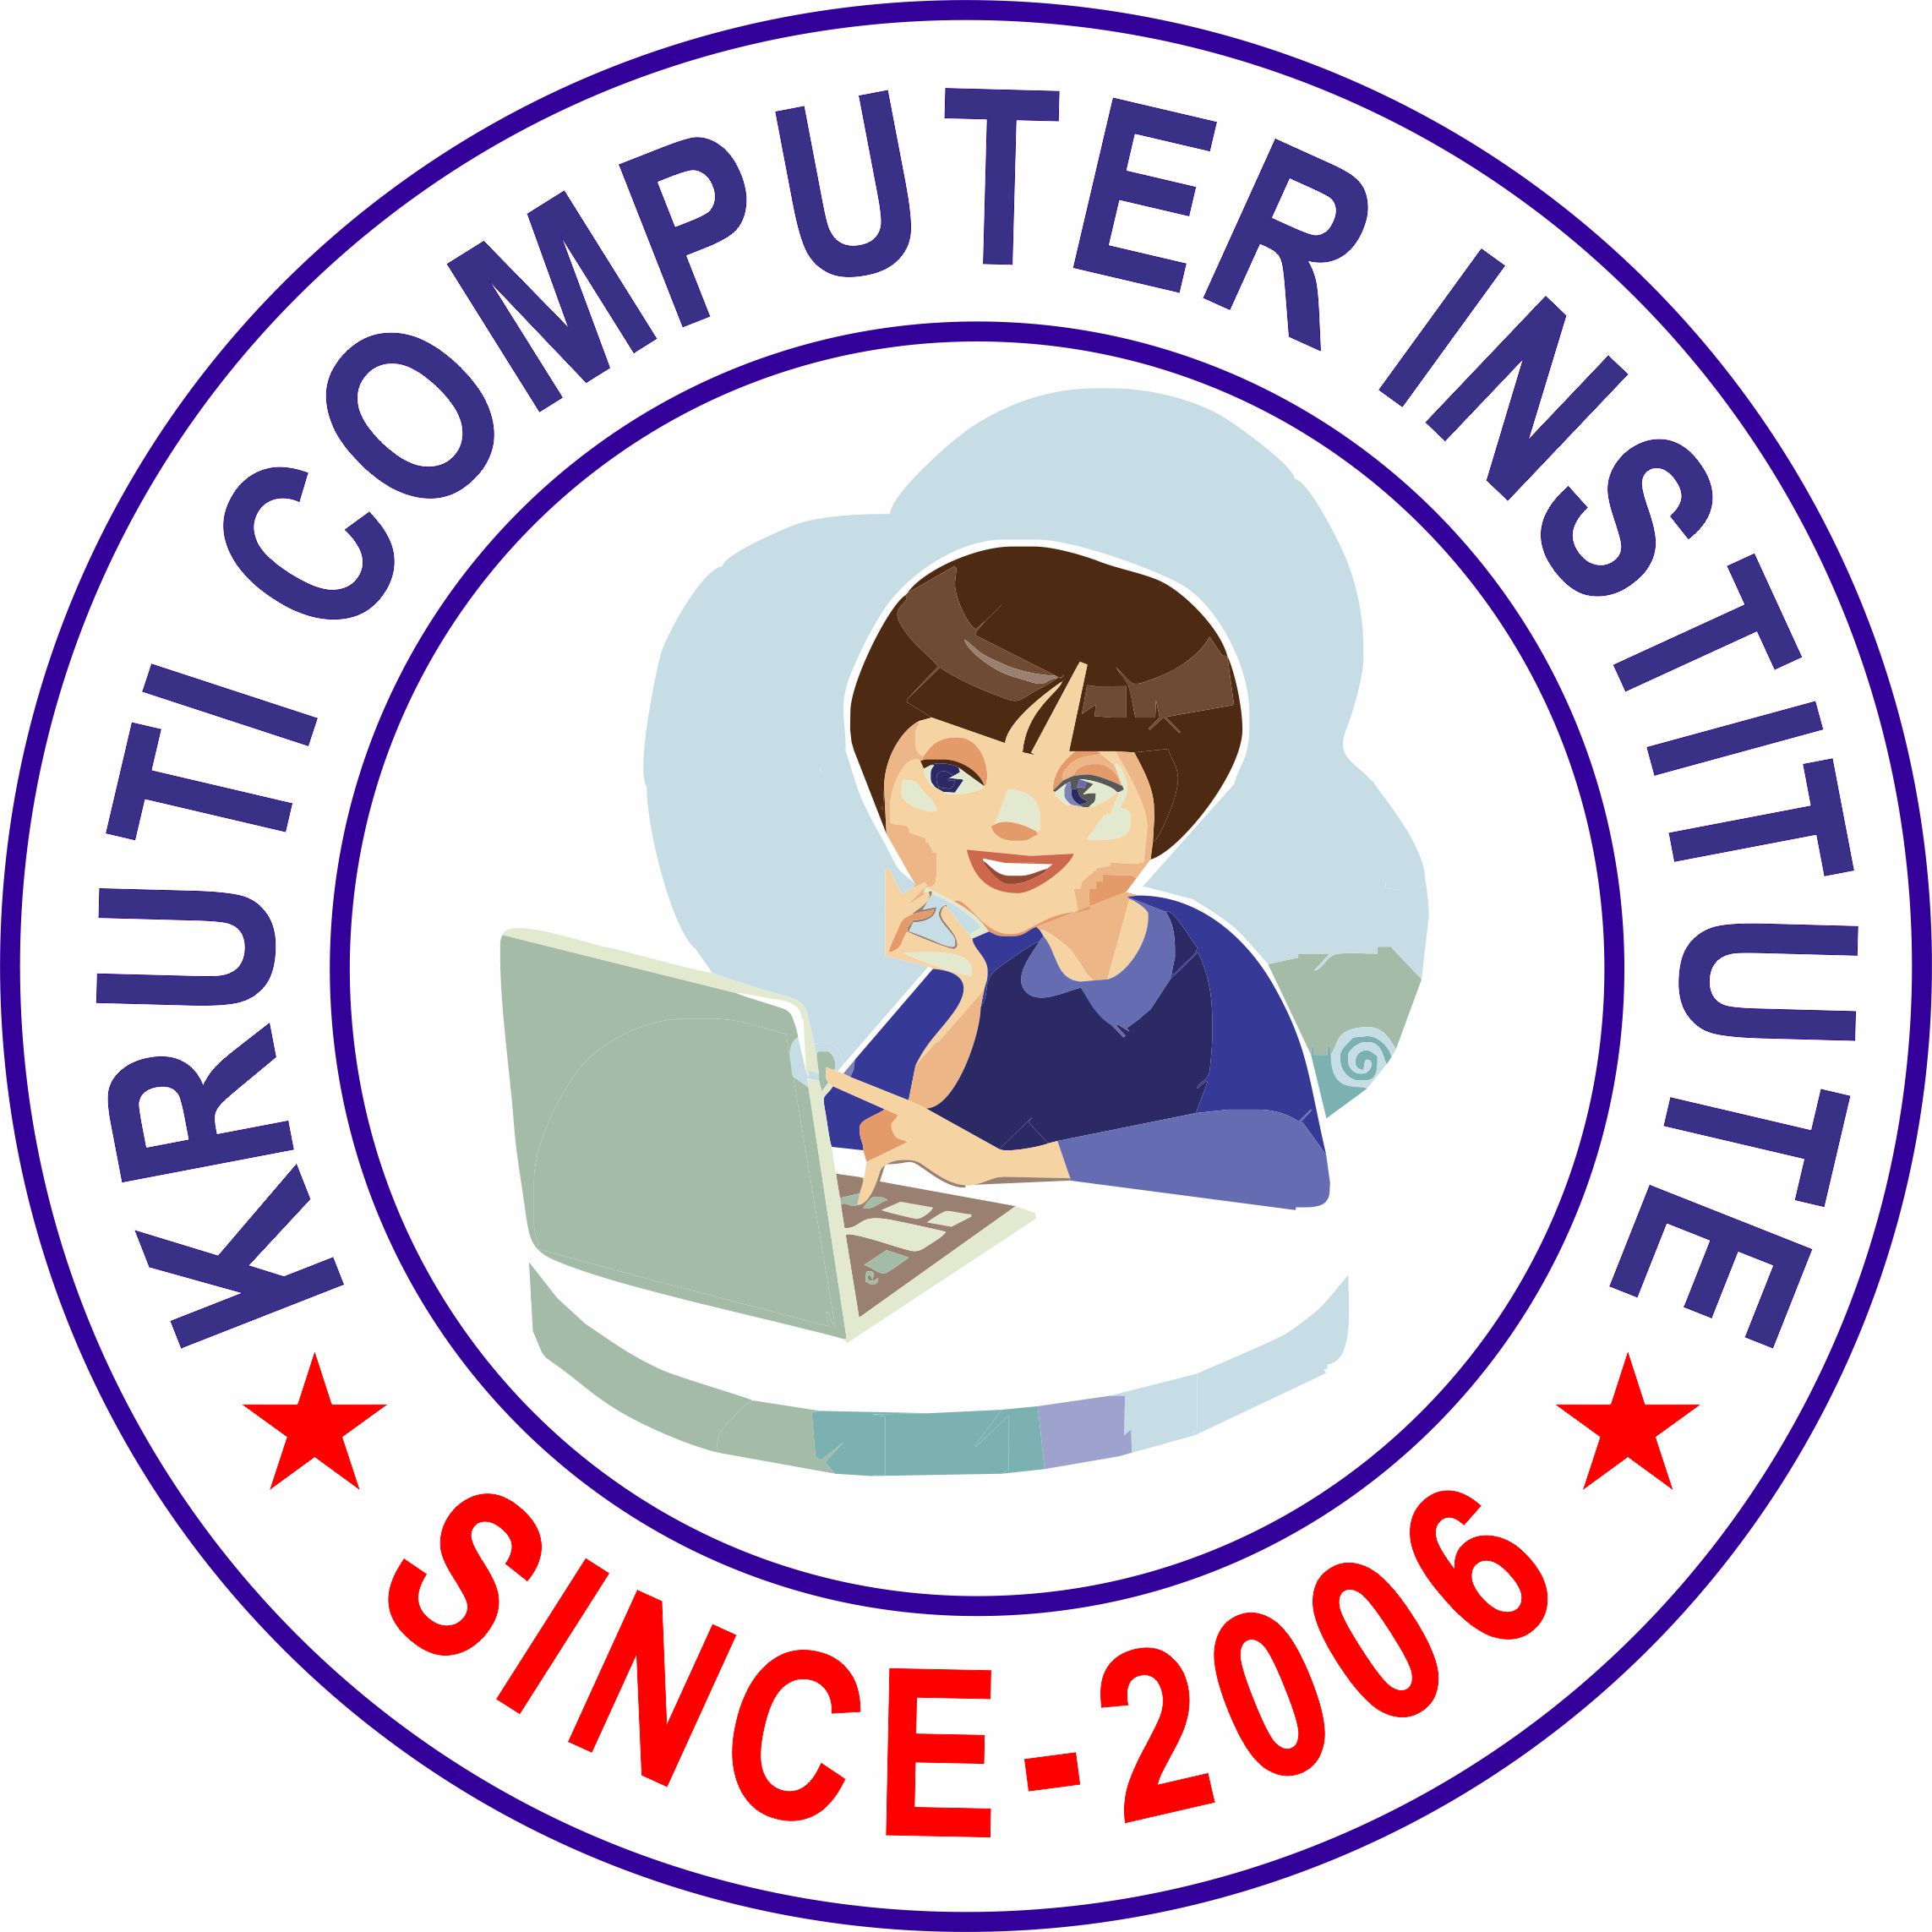 KRUTI COMPUTER INSTITUTE